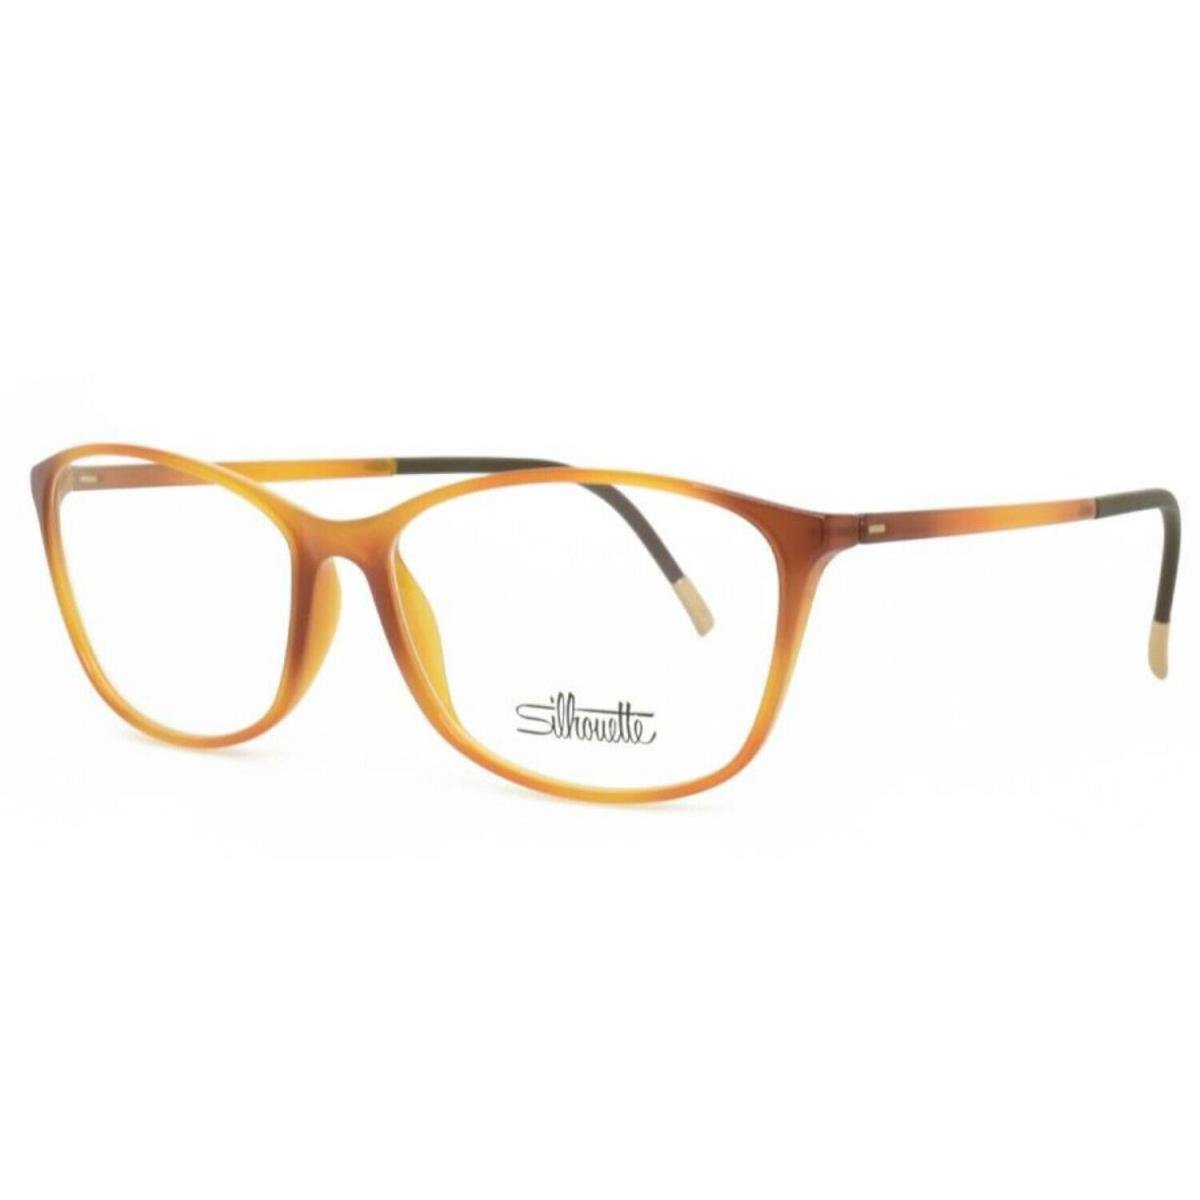 Silhouette Eyeglasses Spx Illusion Fullrim 55-15-135 Havanna 1563-6115-55MM